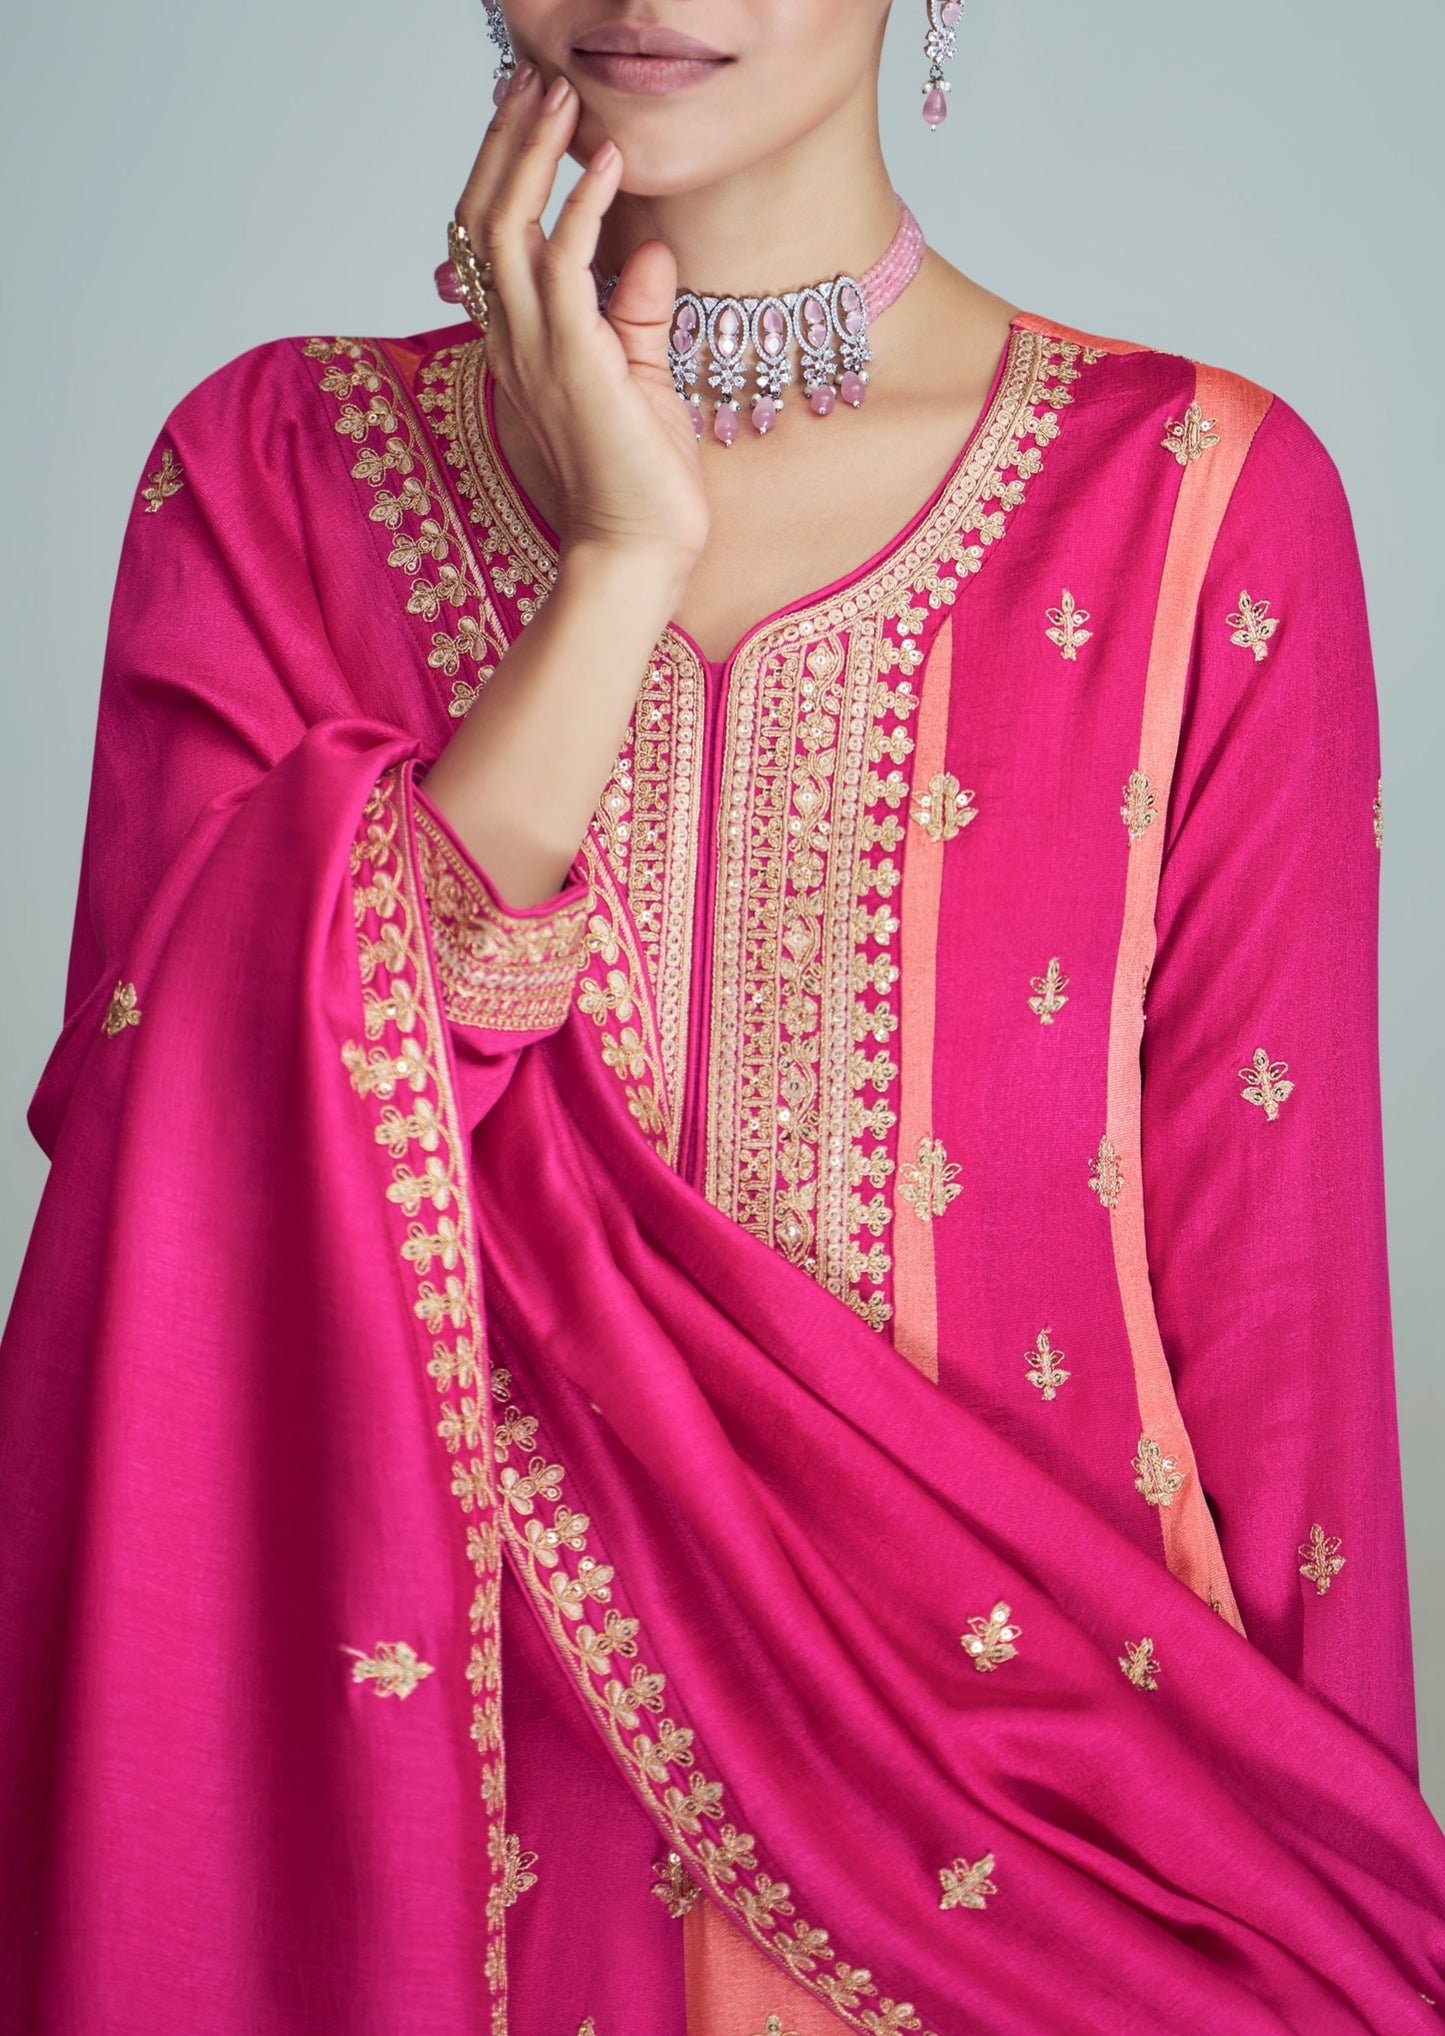 Pink silk suit design for women